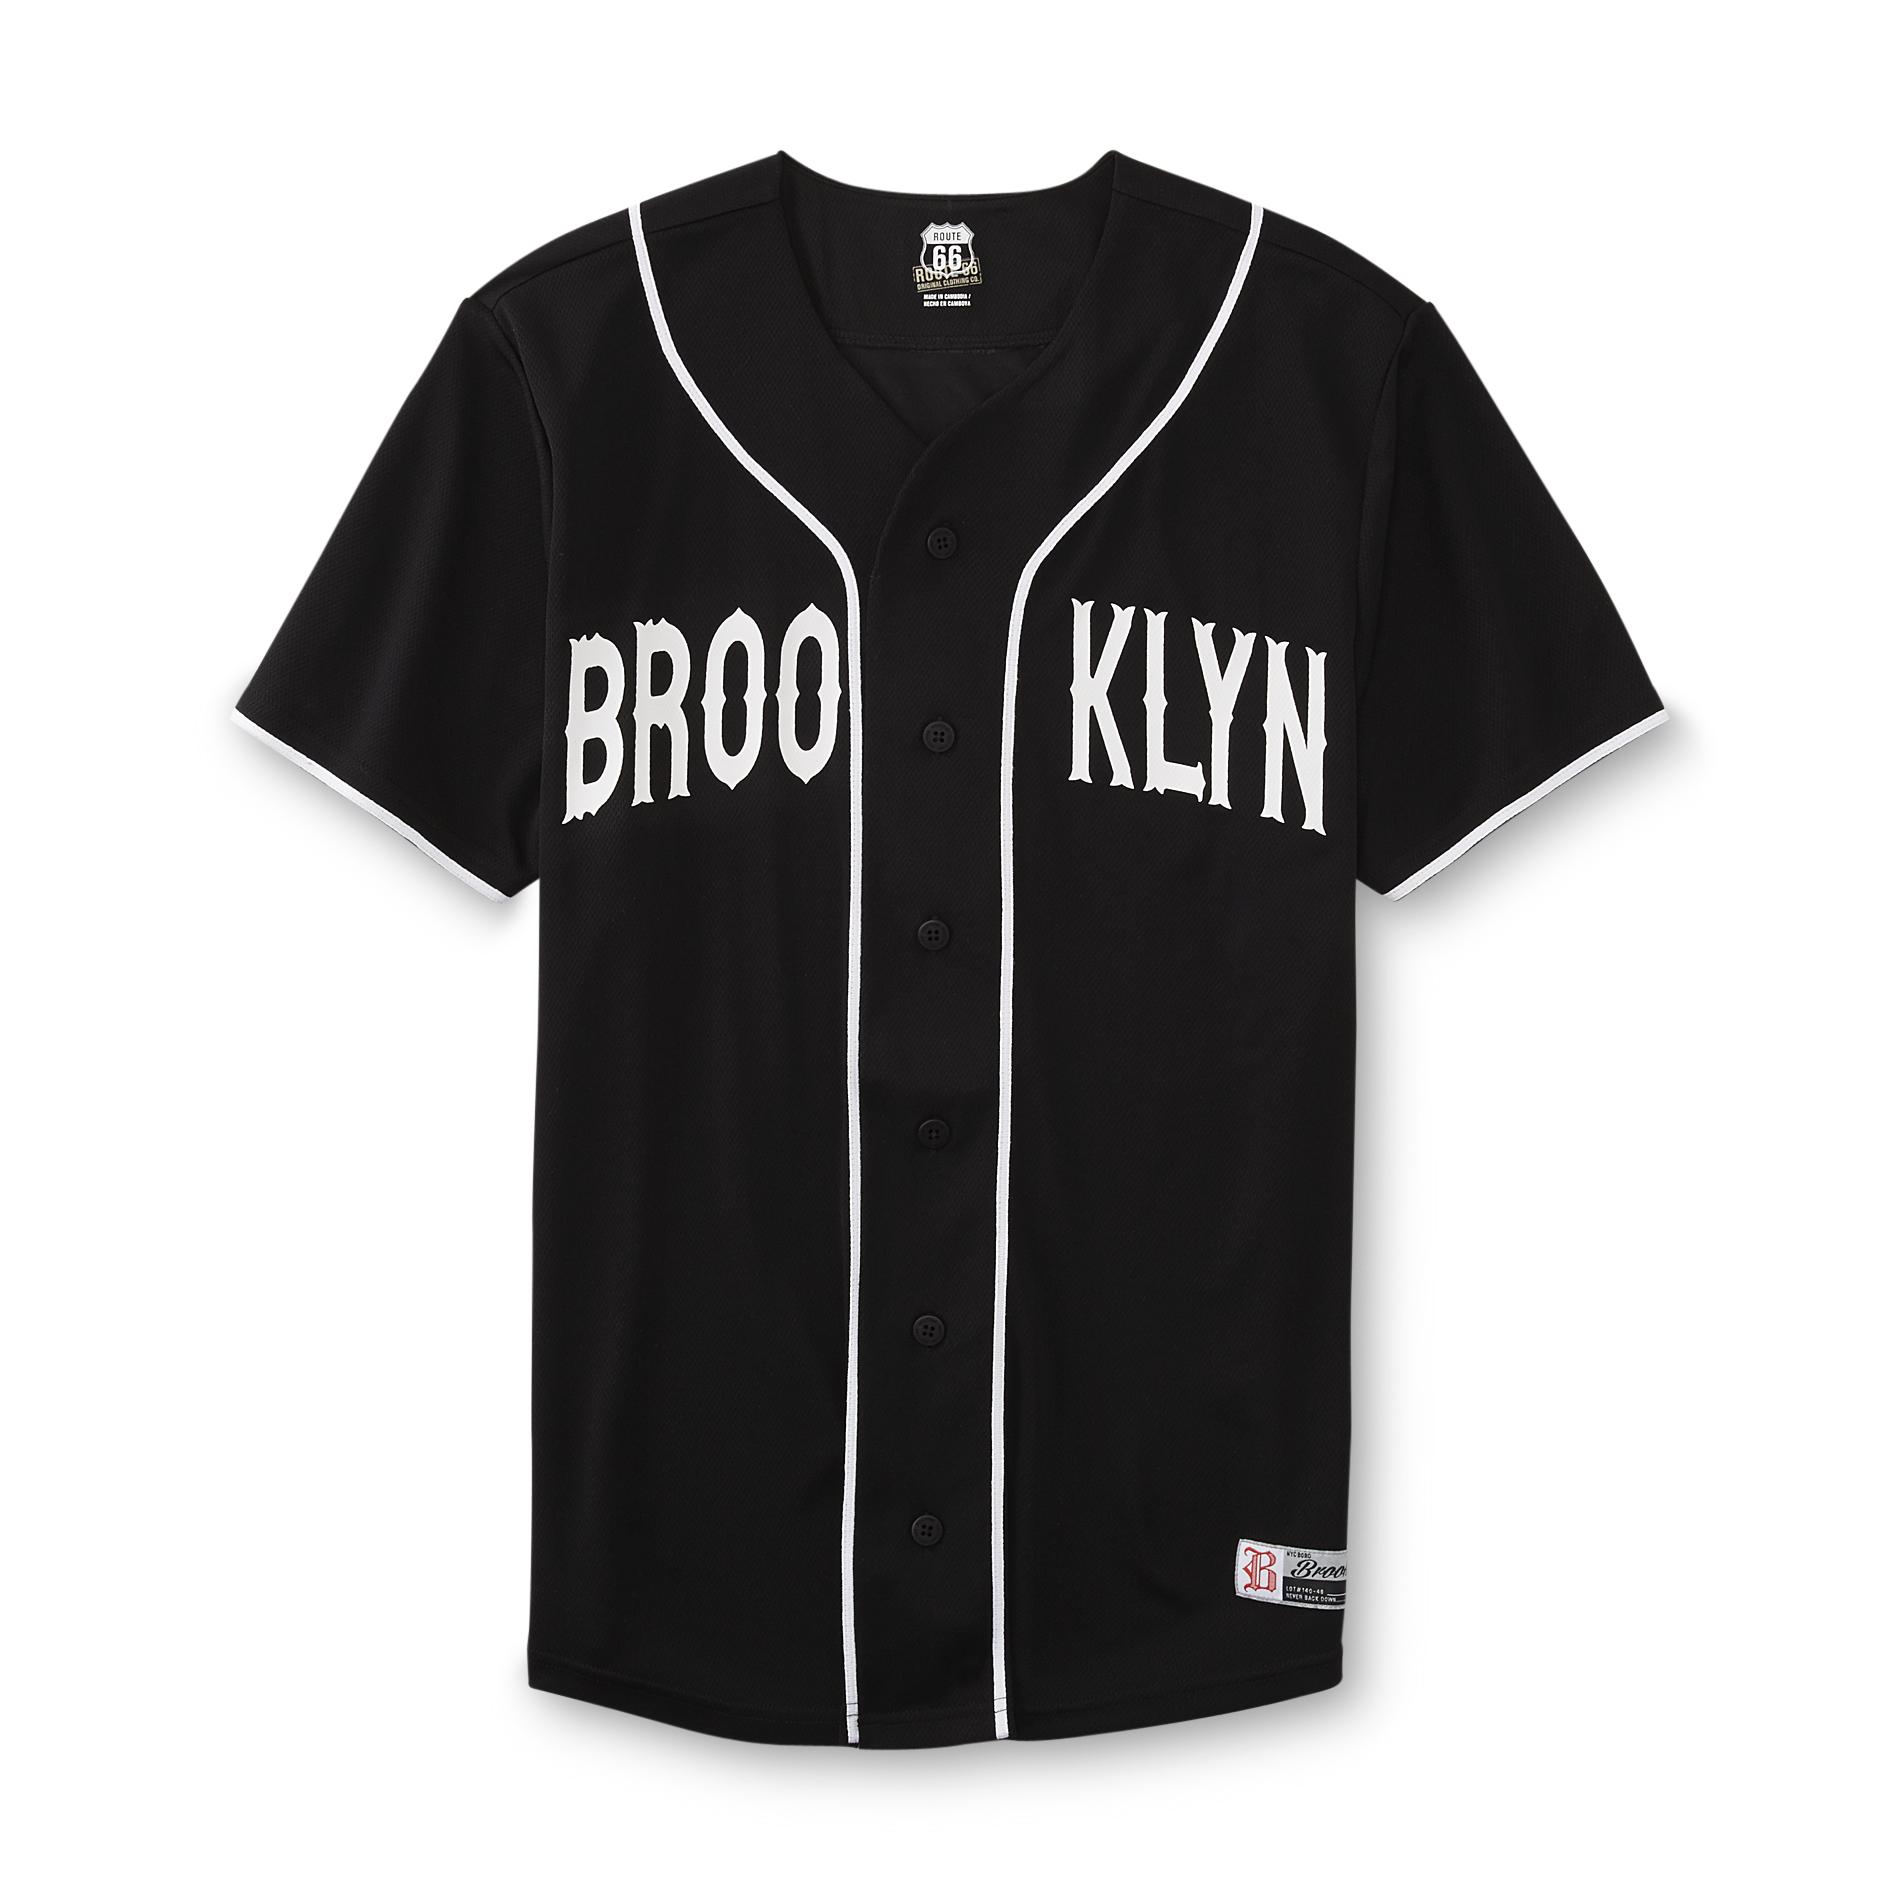 brooklyn baseball jersey black